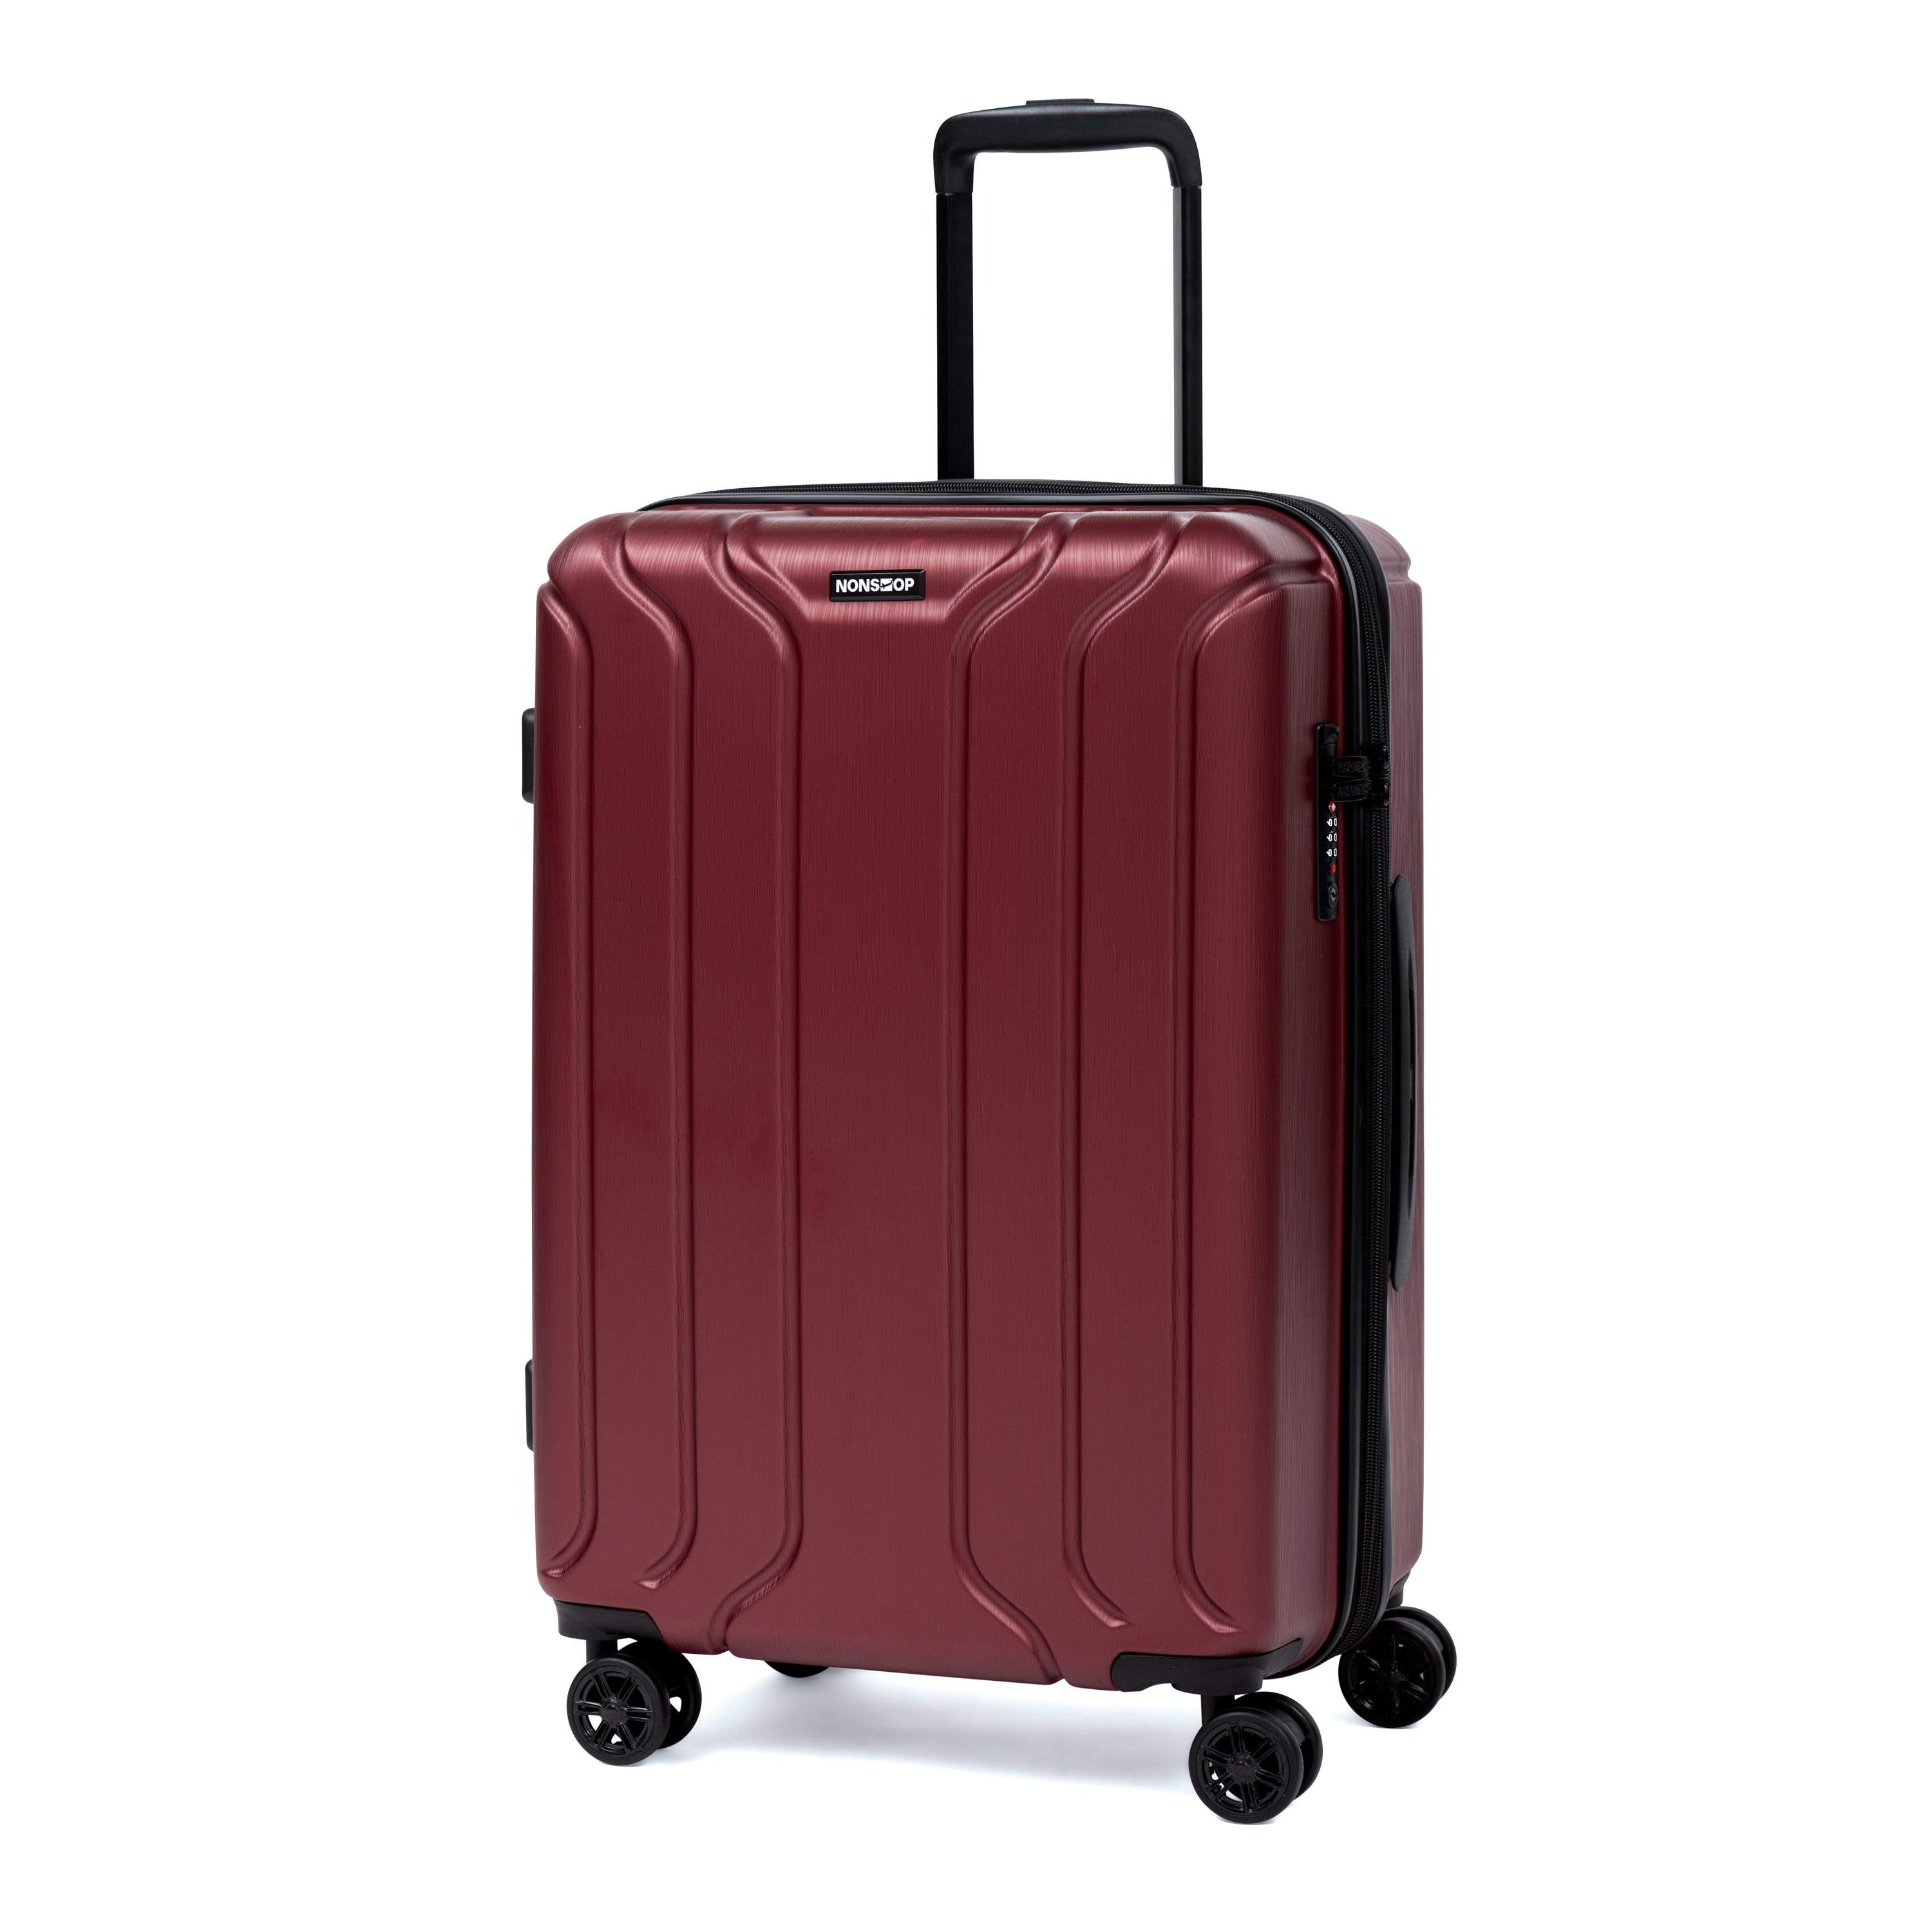 Travel luggage bag – Take OFF Luggage